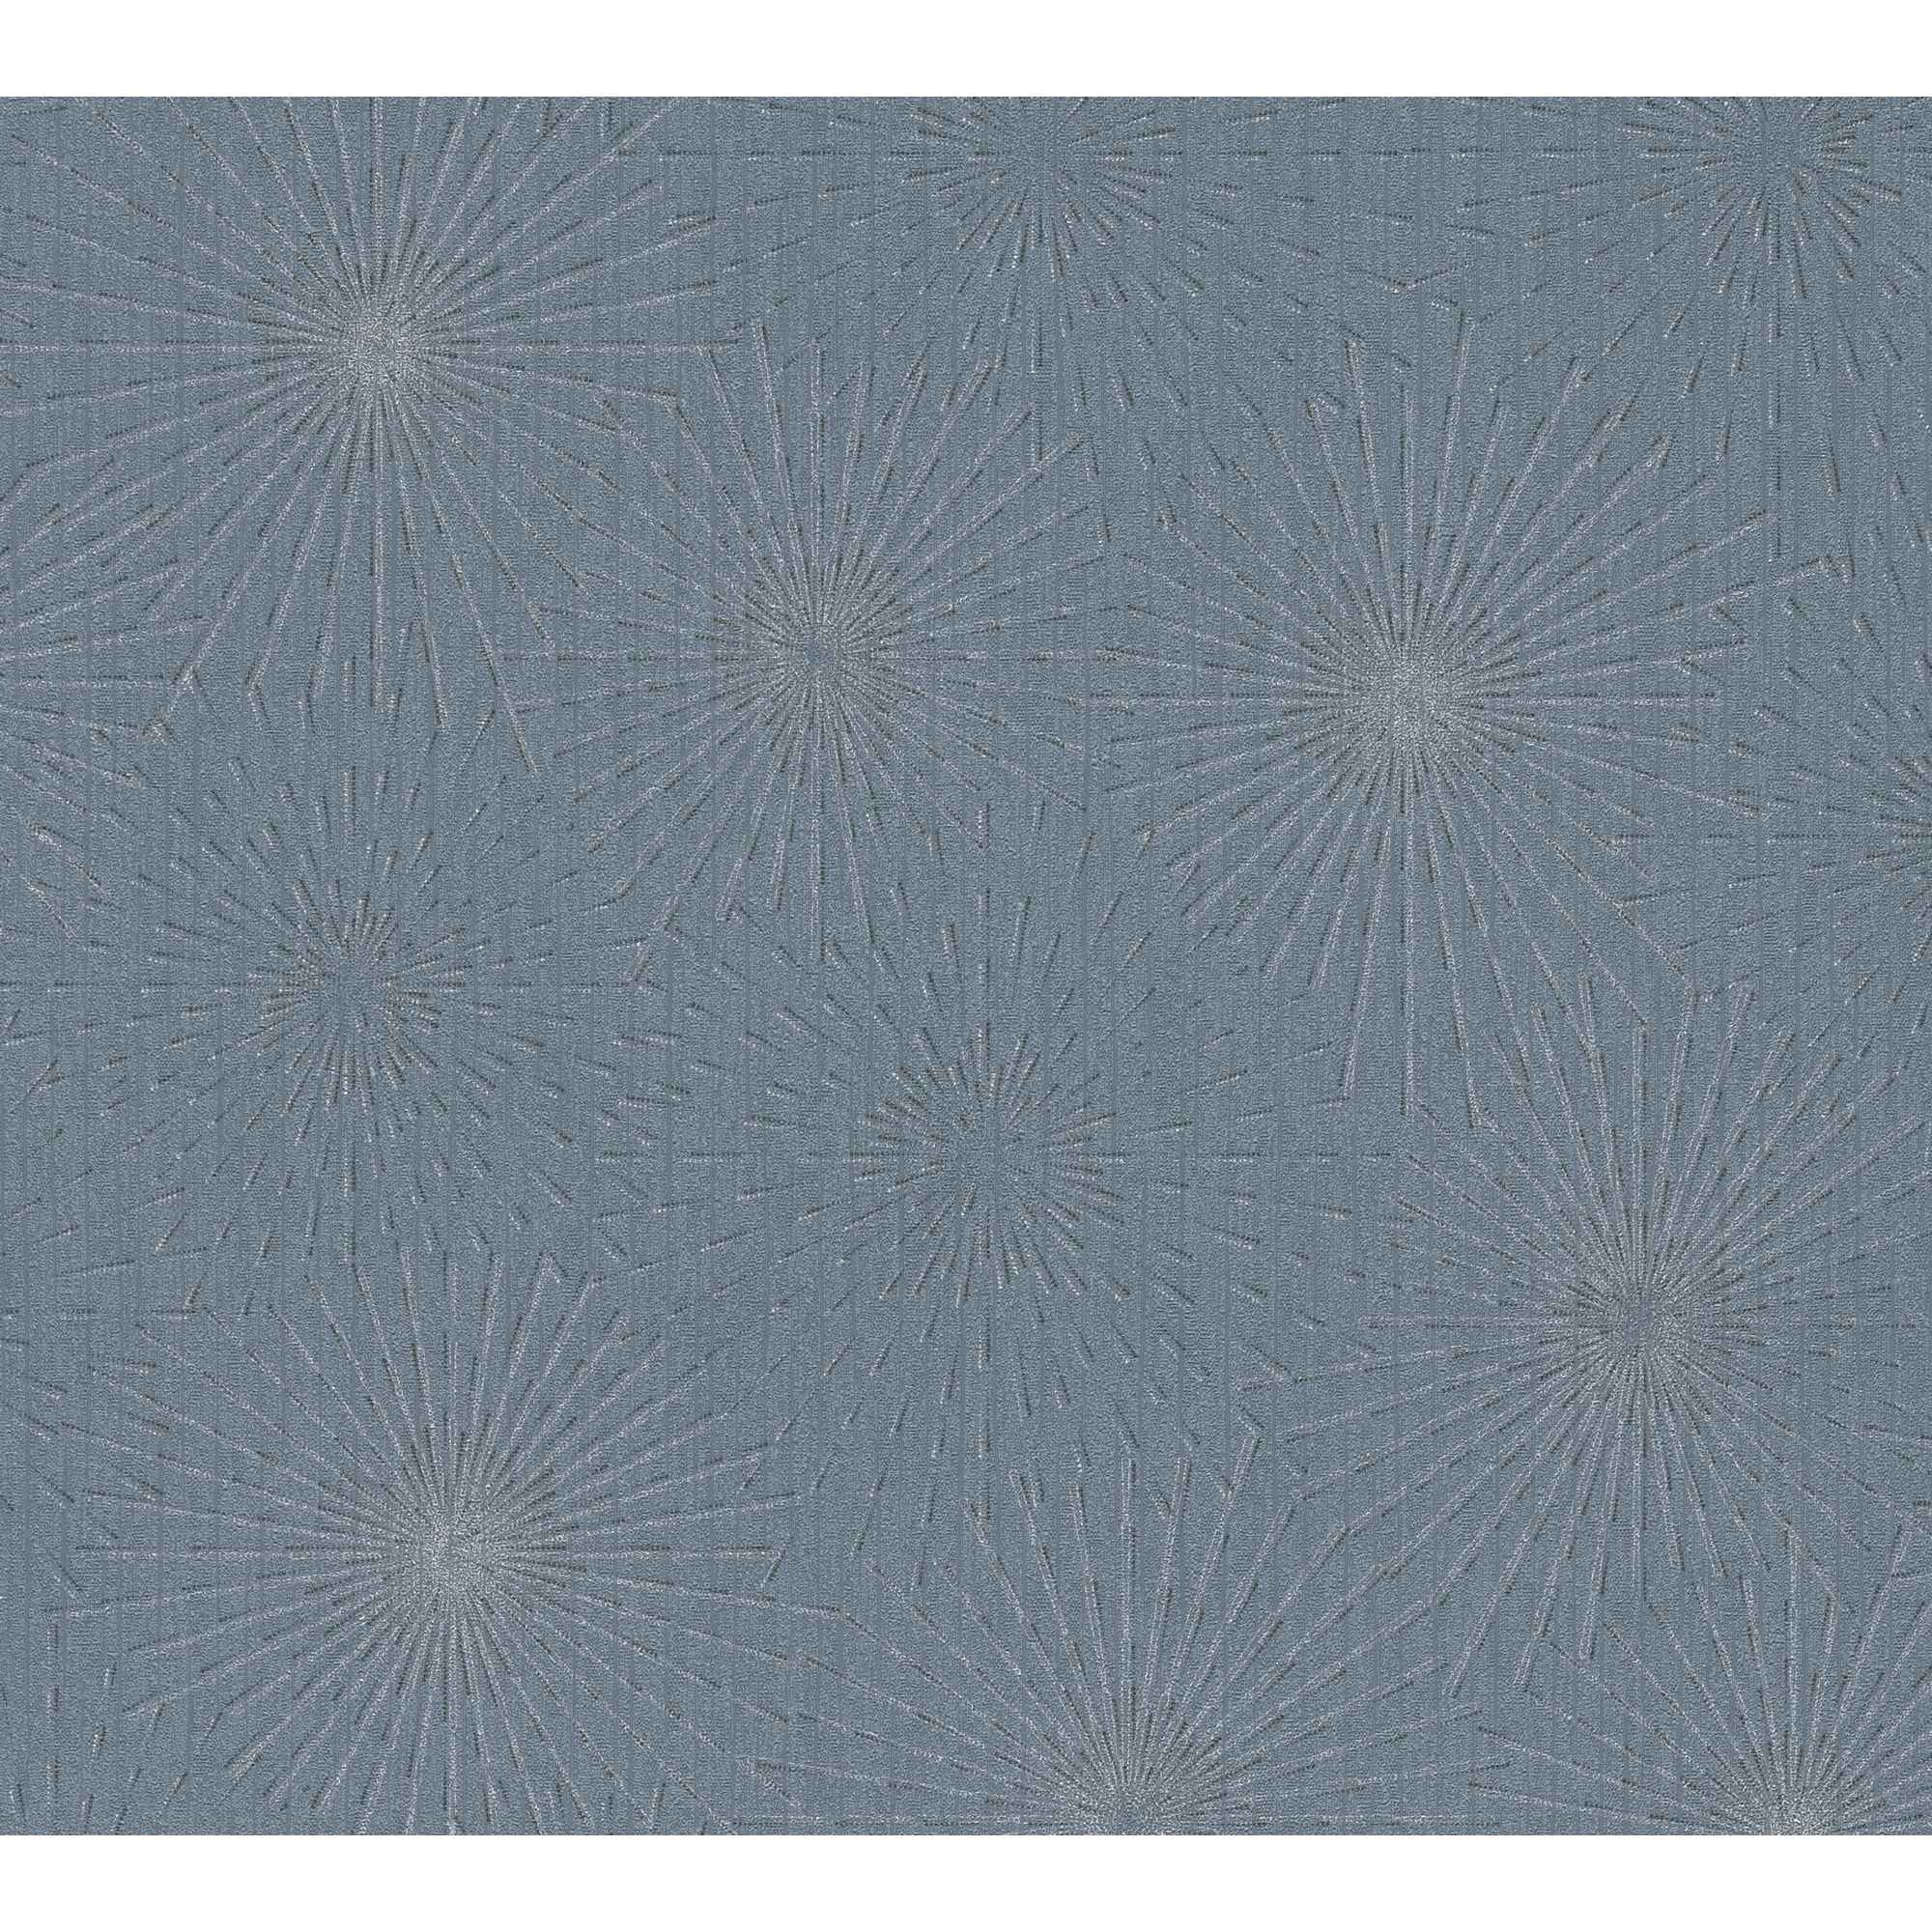 Vliestapete 'The BoS' retro Stern blau/silber 10,05 x 0,53 m + product picture